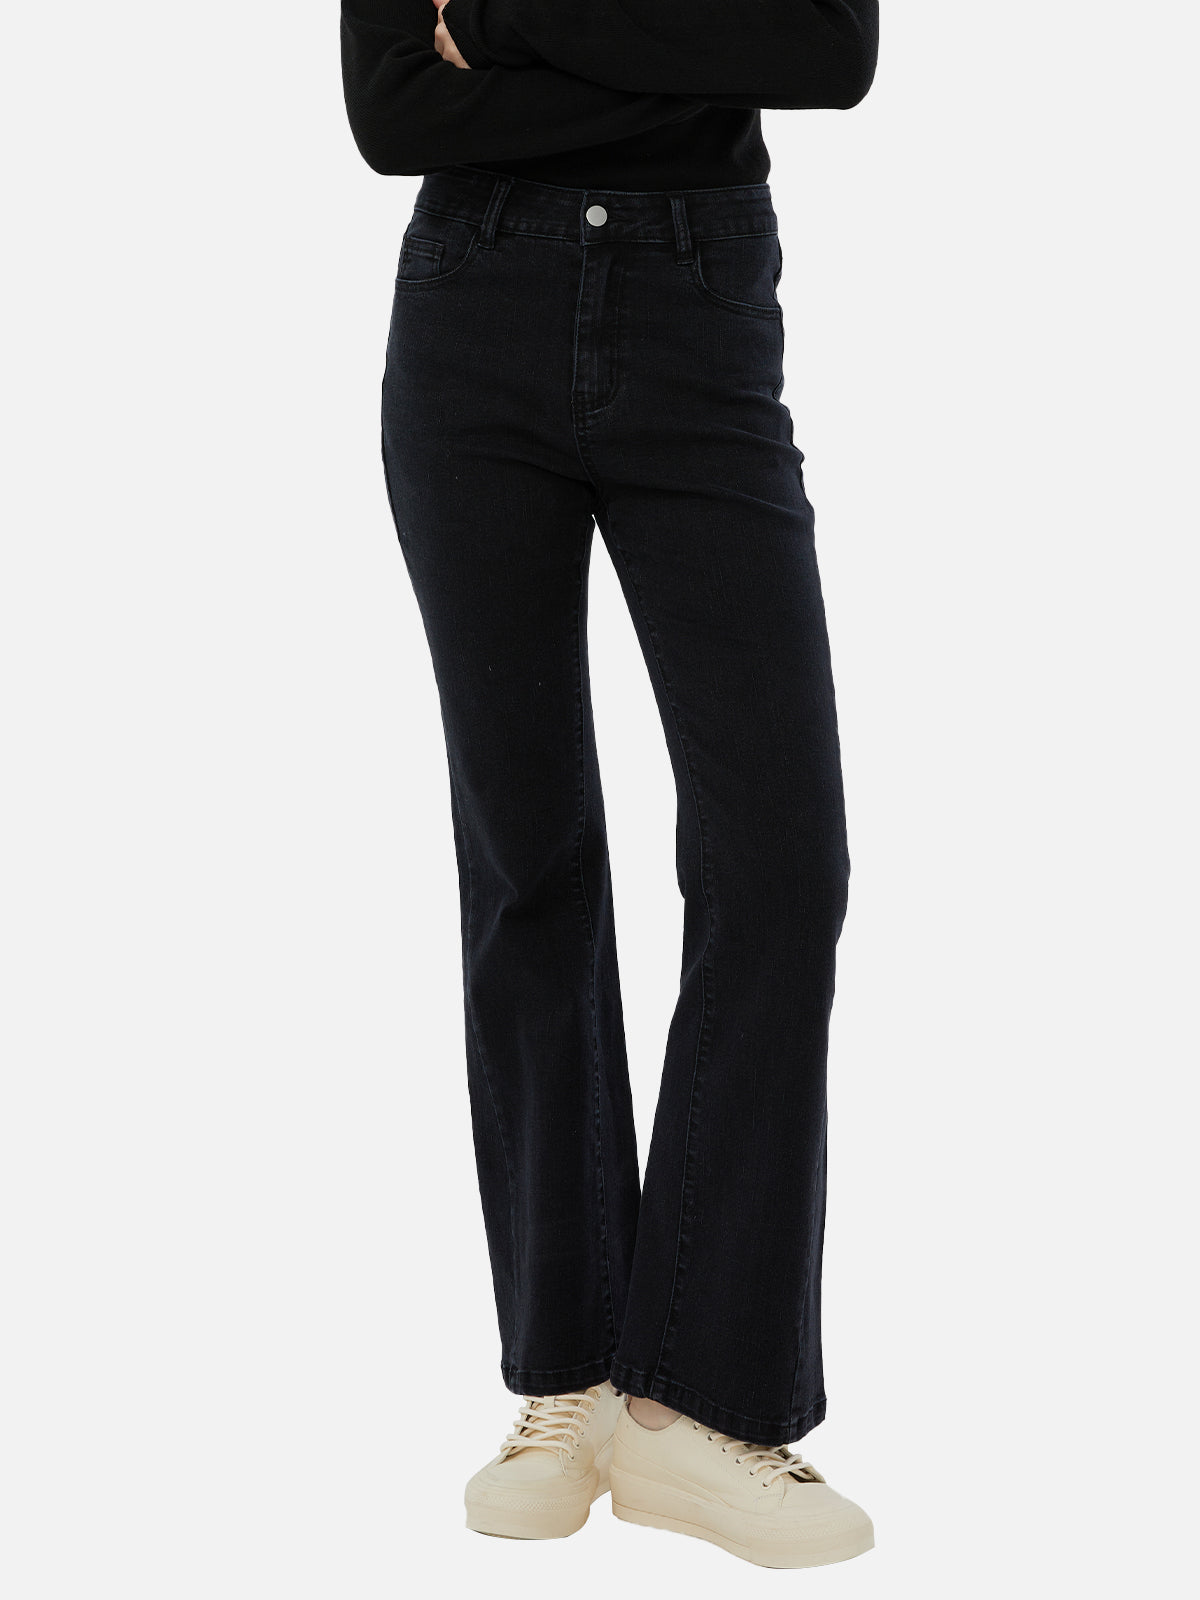 stylish deep gray high-waisted flared denim pants 